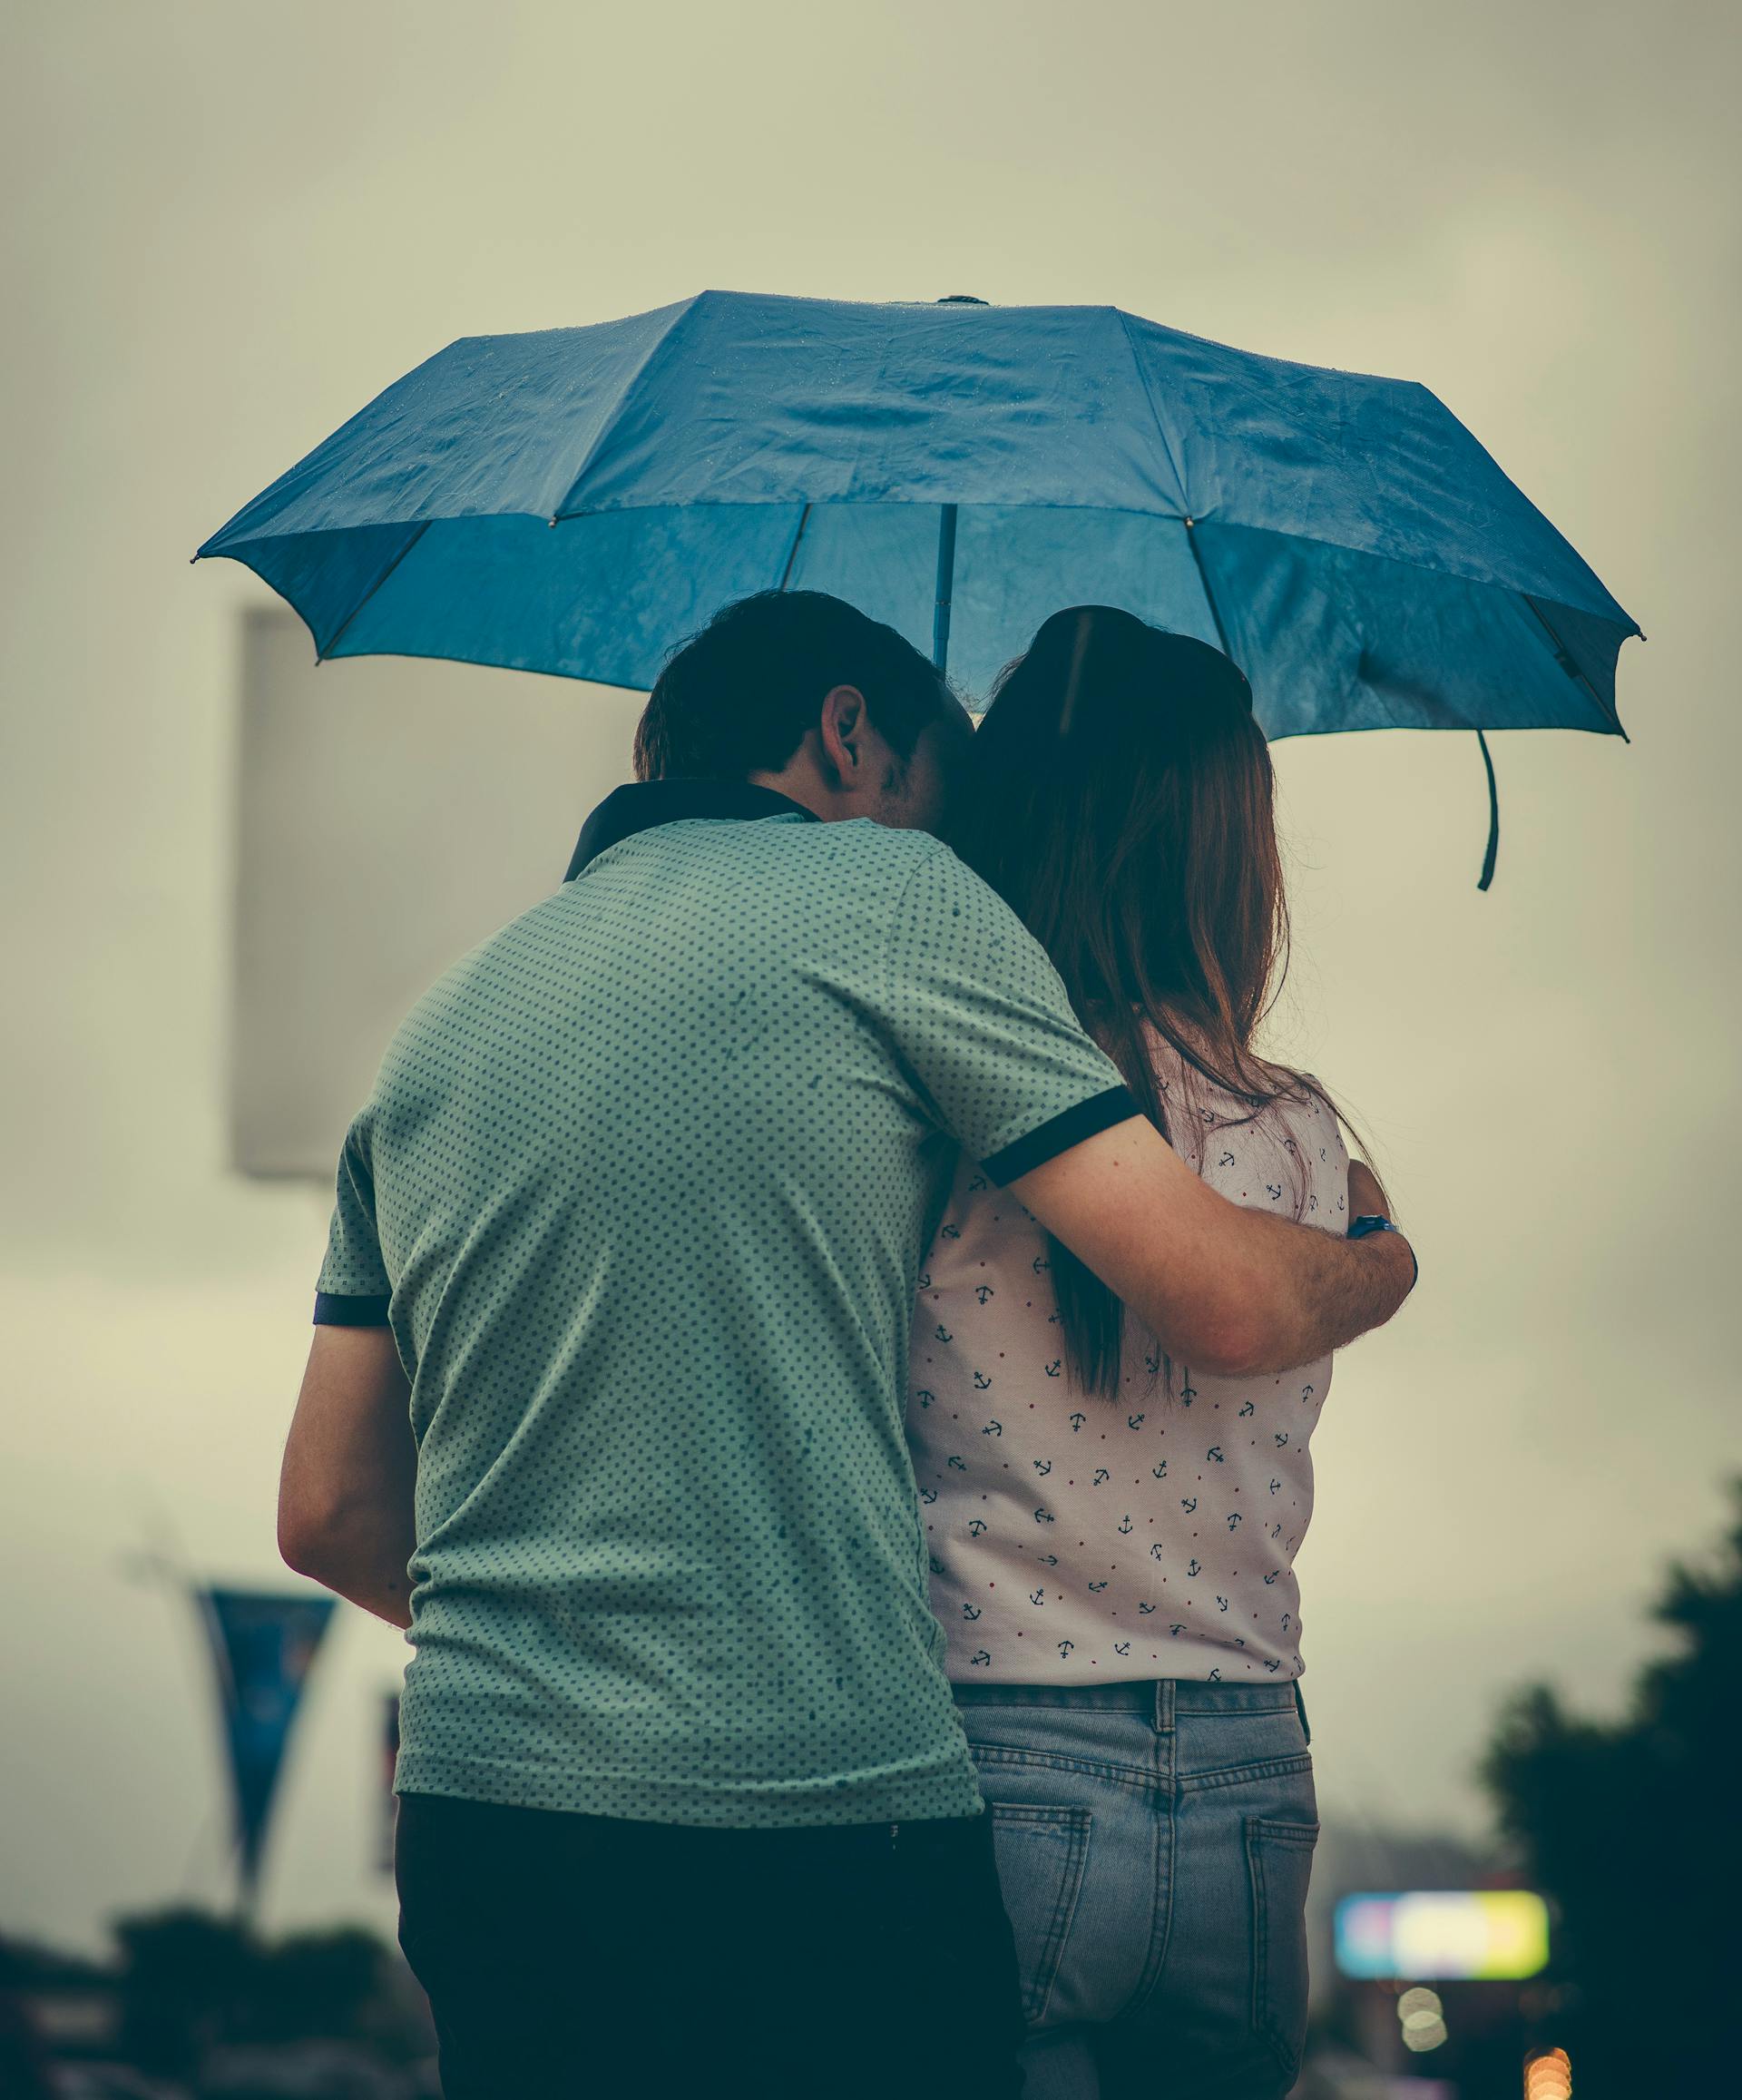 A couple standing under an umbrella | Source: Pexels